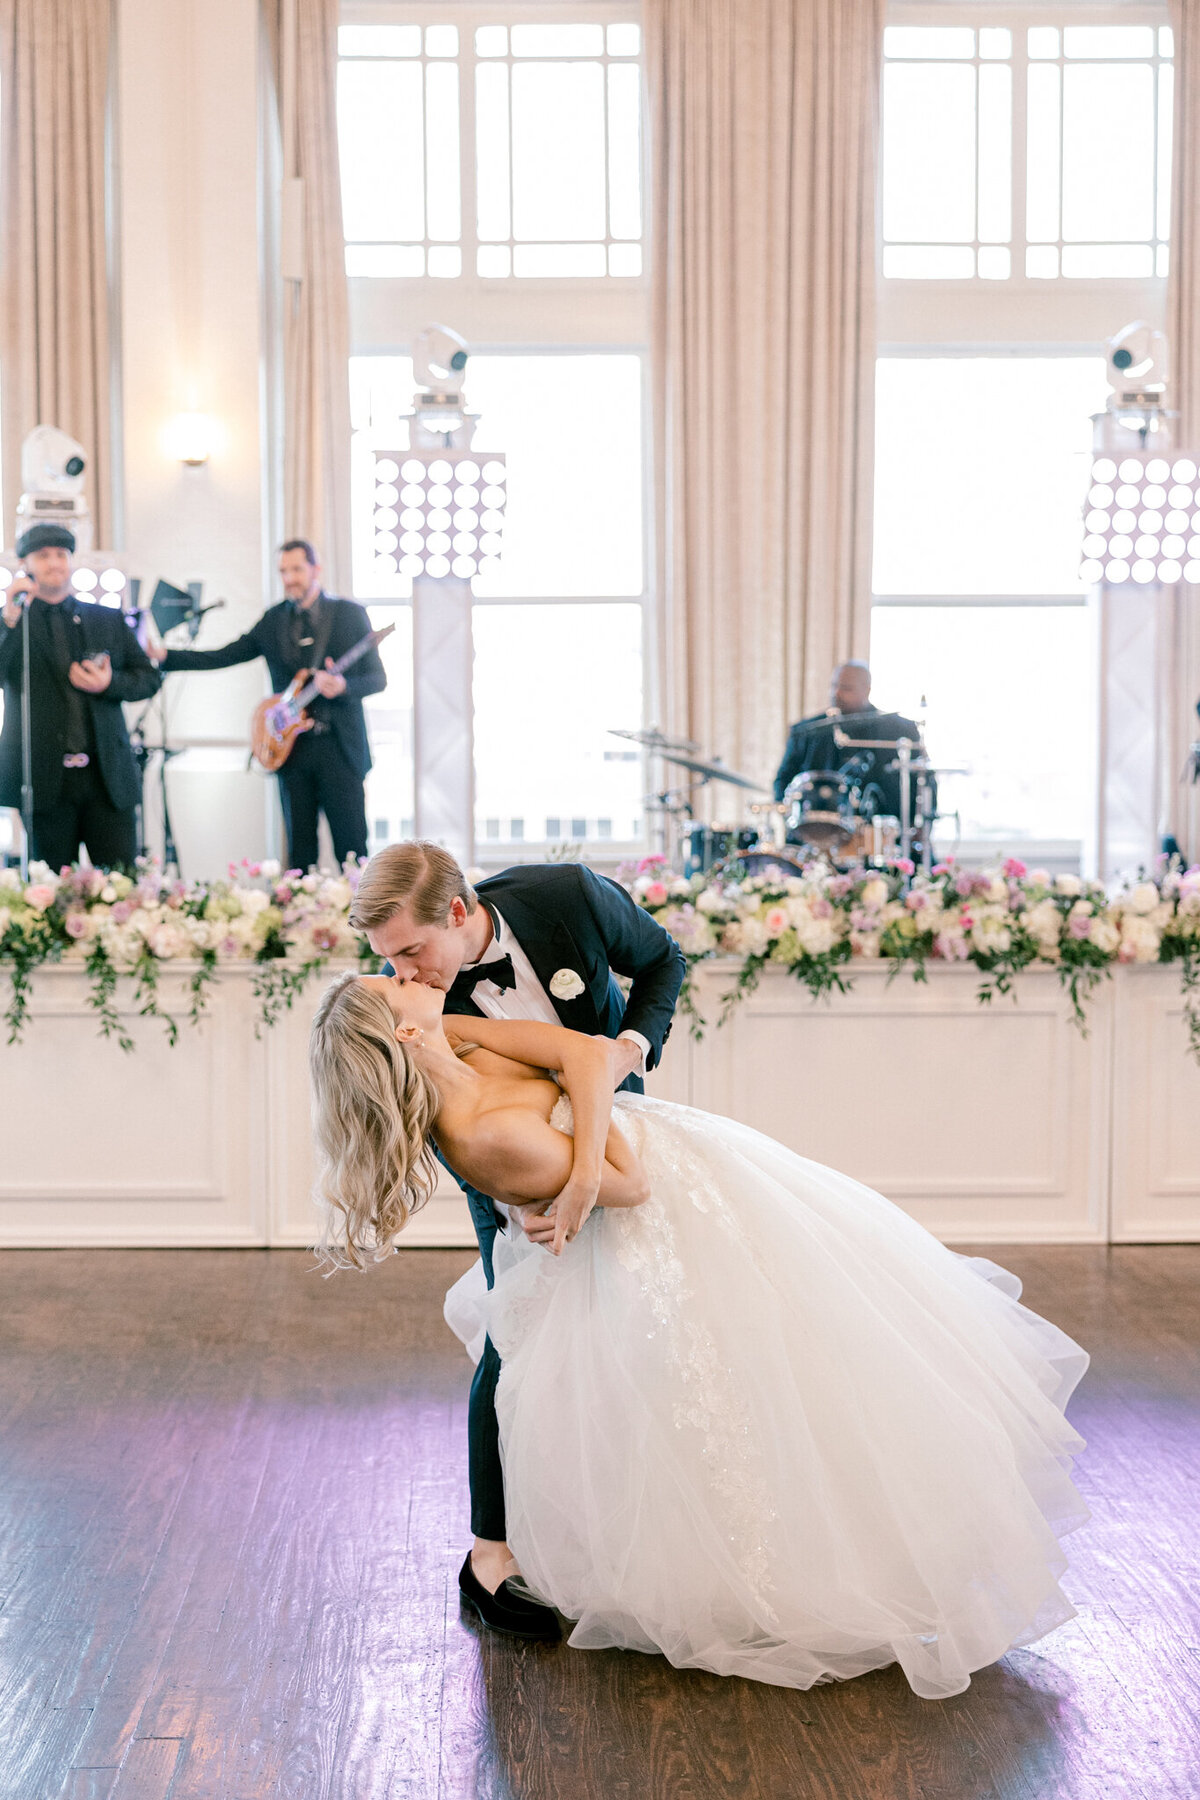 Shelby & Thomas's Wedding at HPUMC The Room on Main | Dallas Wedding Photographer | Sami Kathryn Photography-196